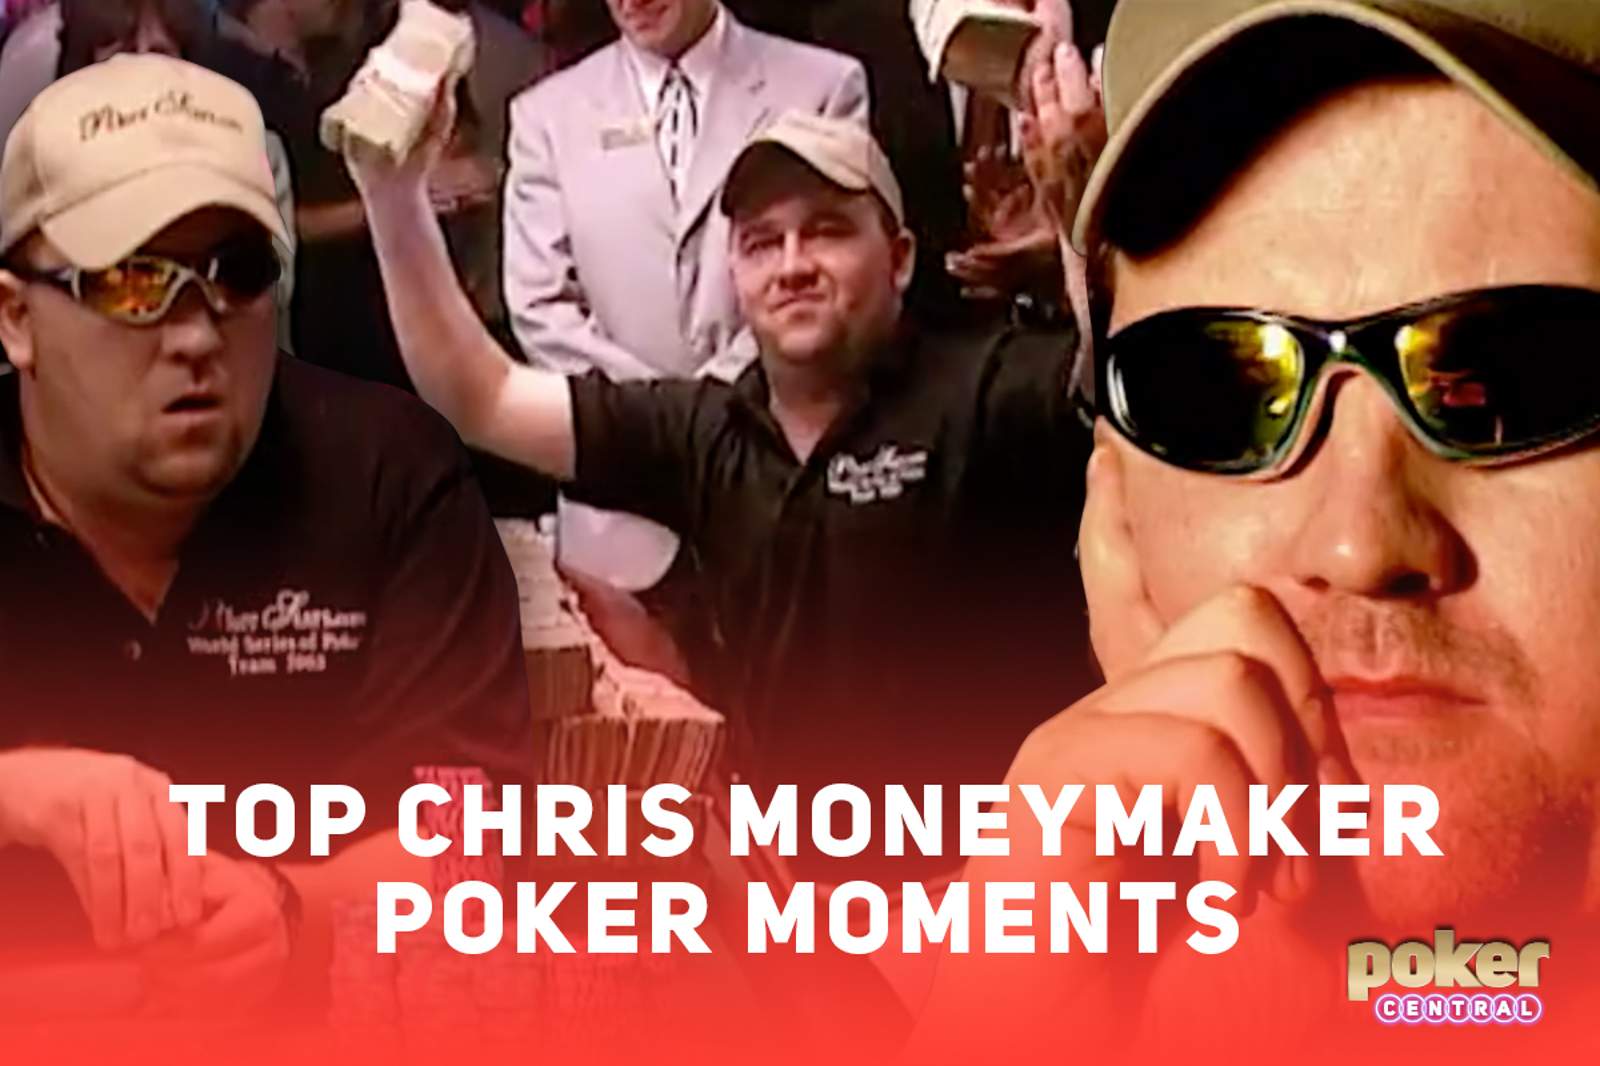 Top Chris Moneymaker Poker Moments